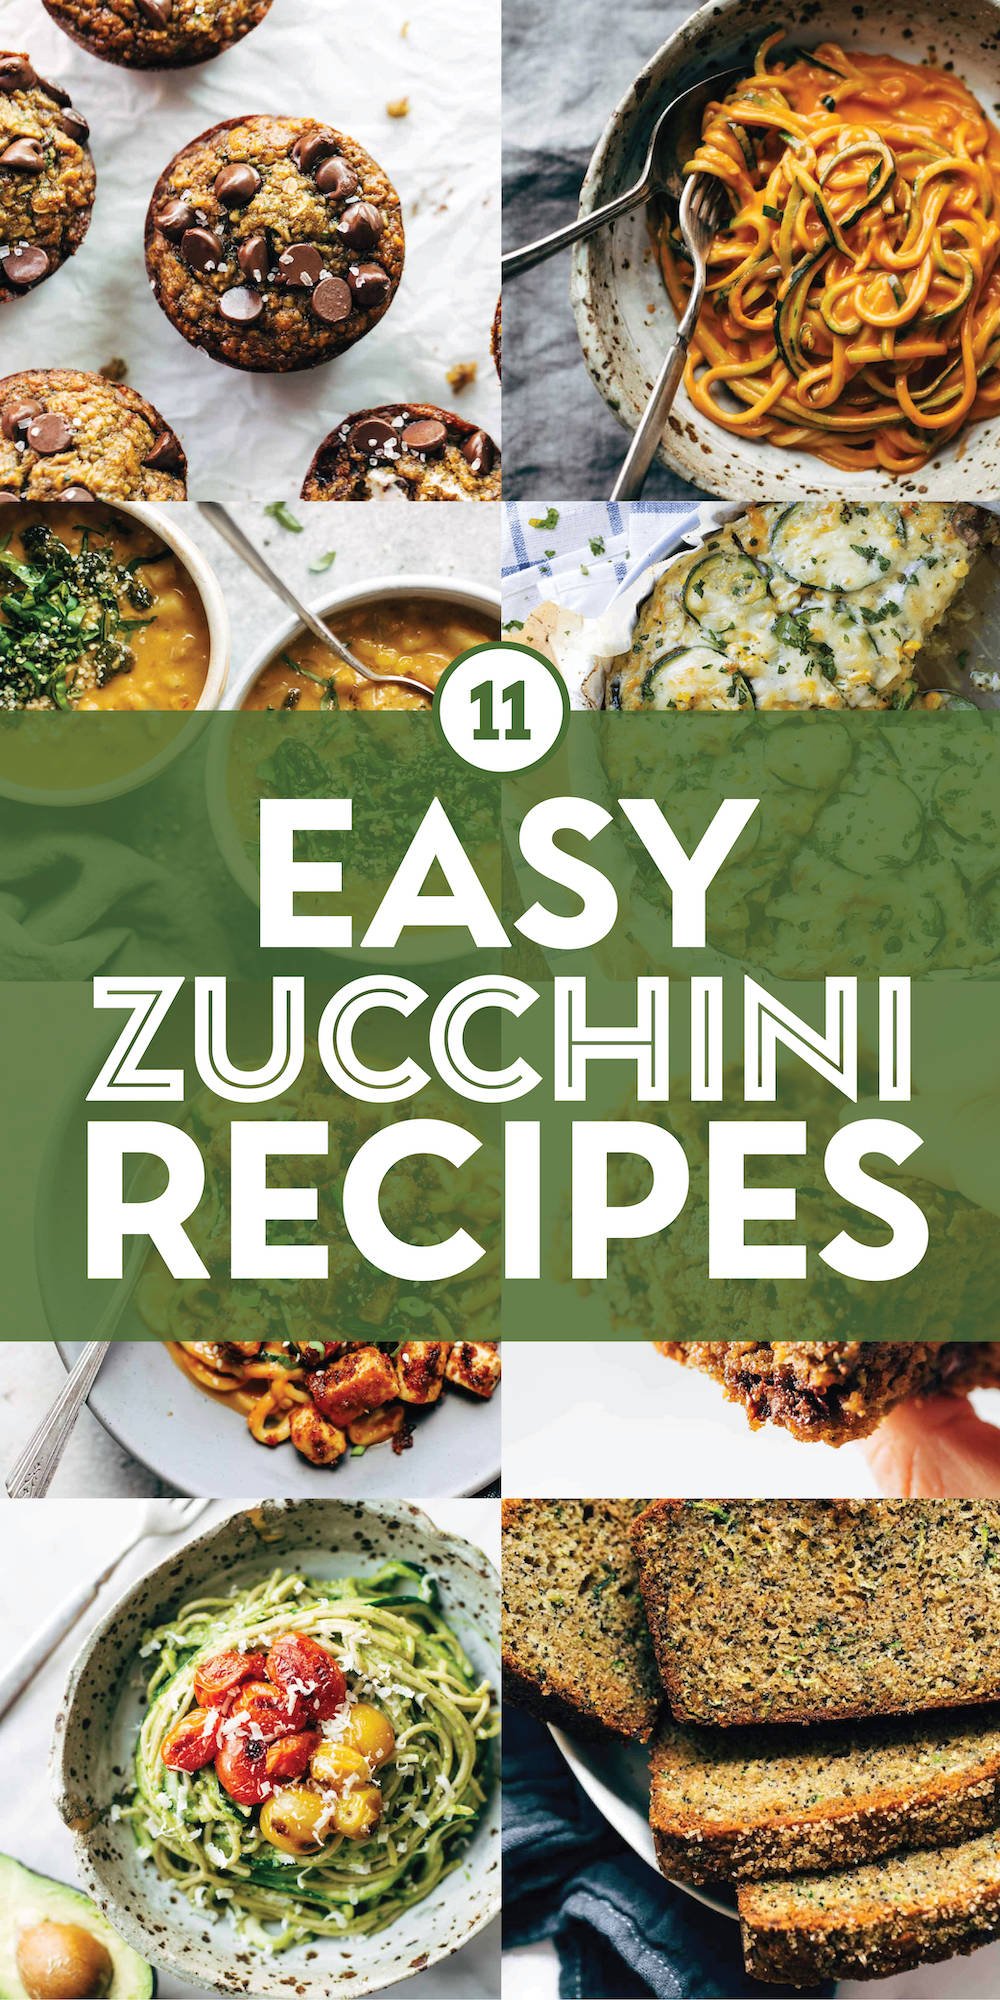 Easy zucchini recipes in a collage.